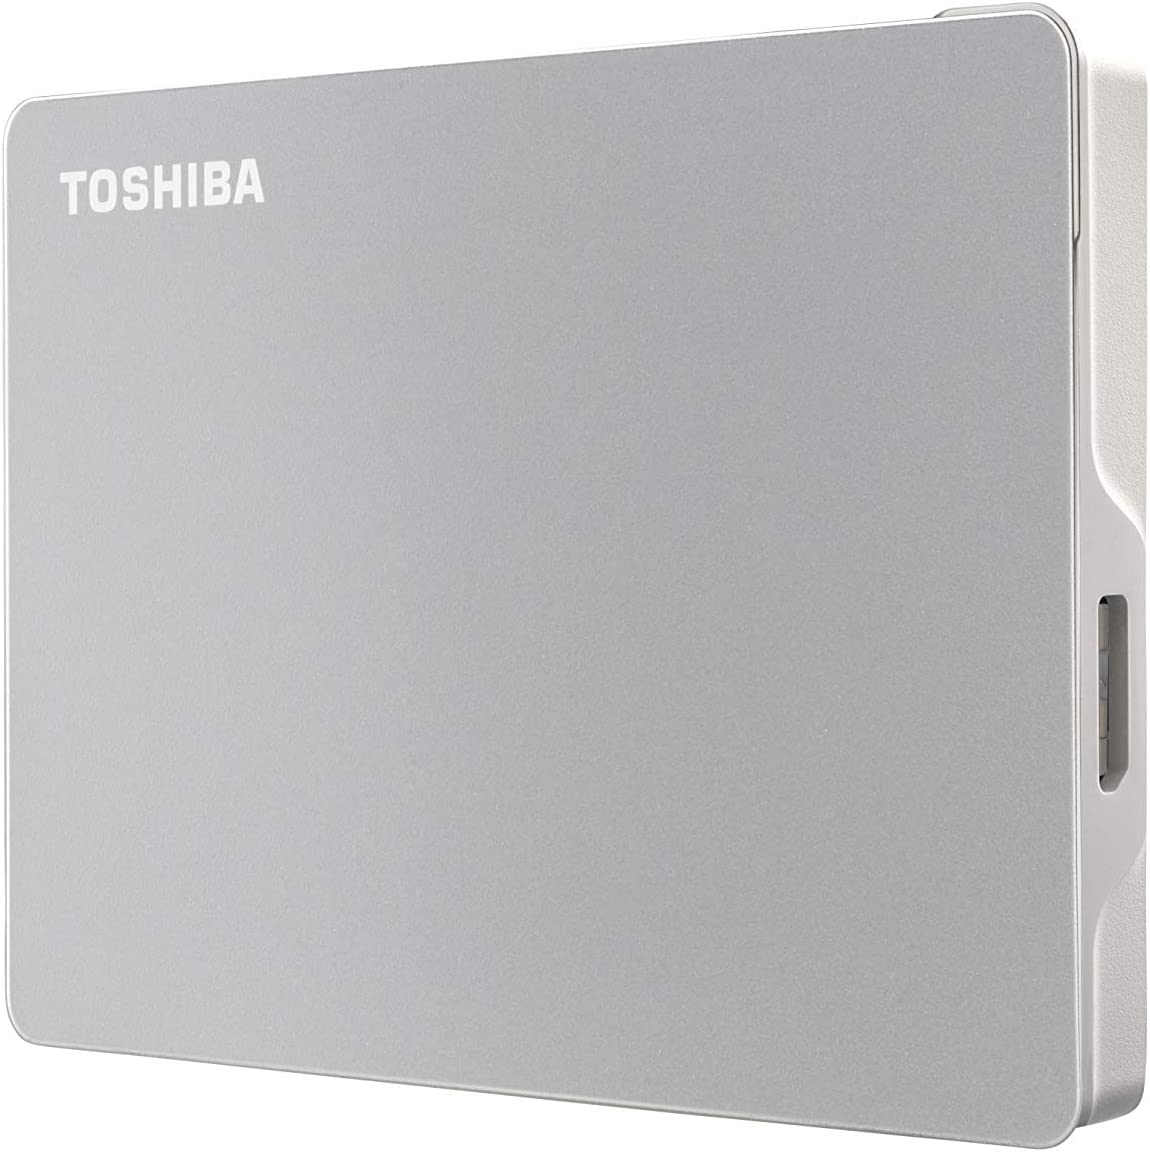 Disco Duro Externo Toshiba Canvio Flex 1TB Portátil Blanco